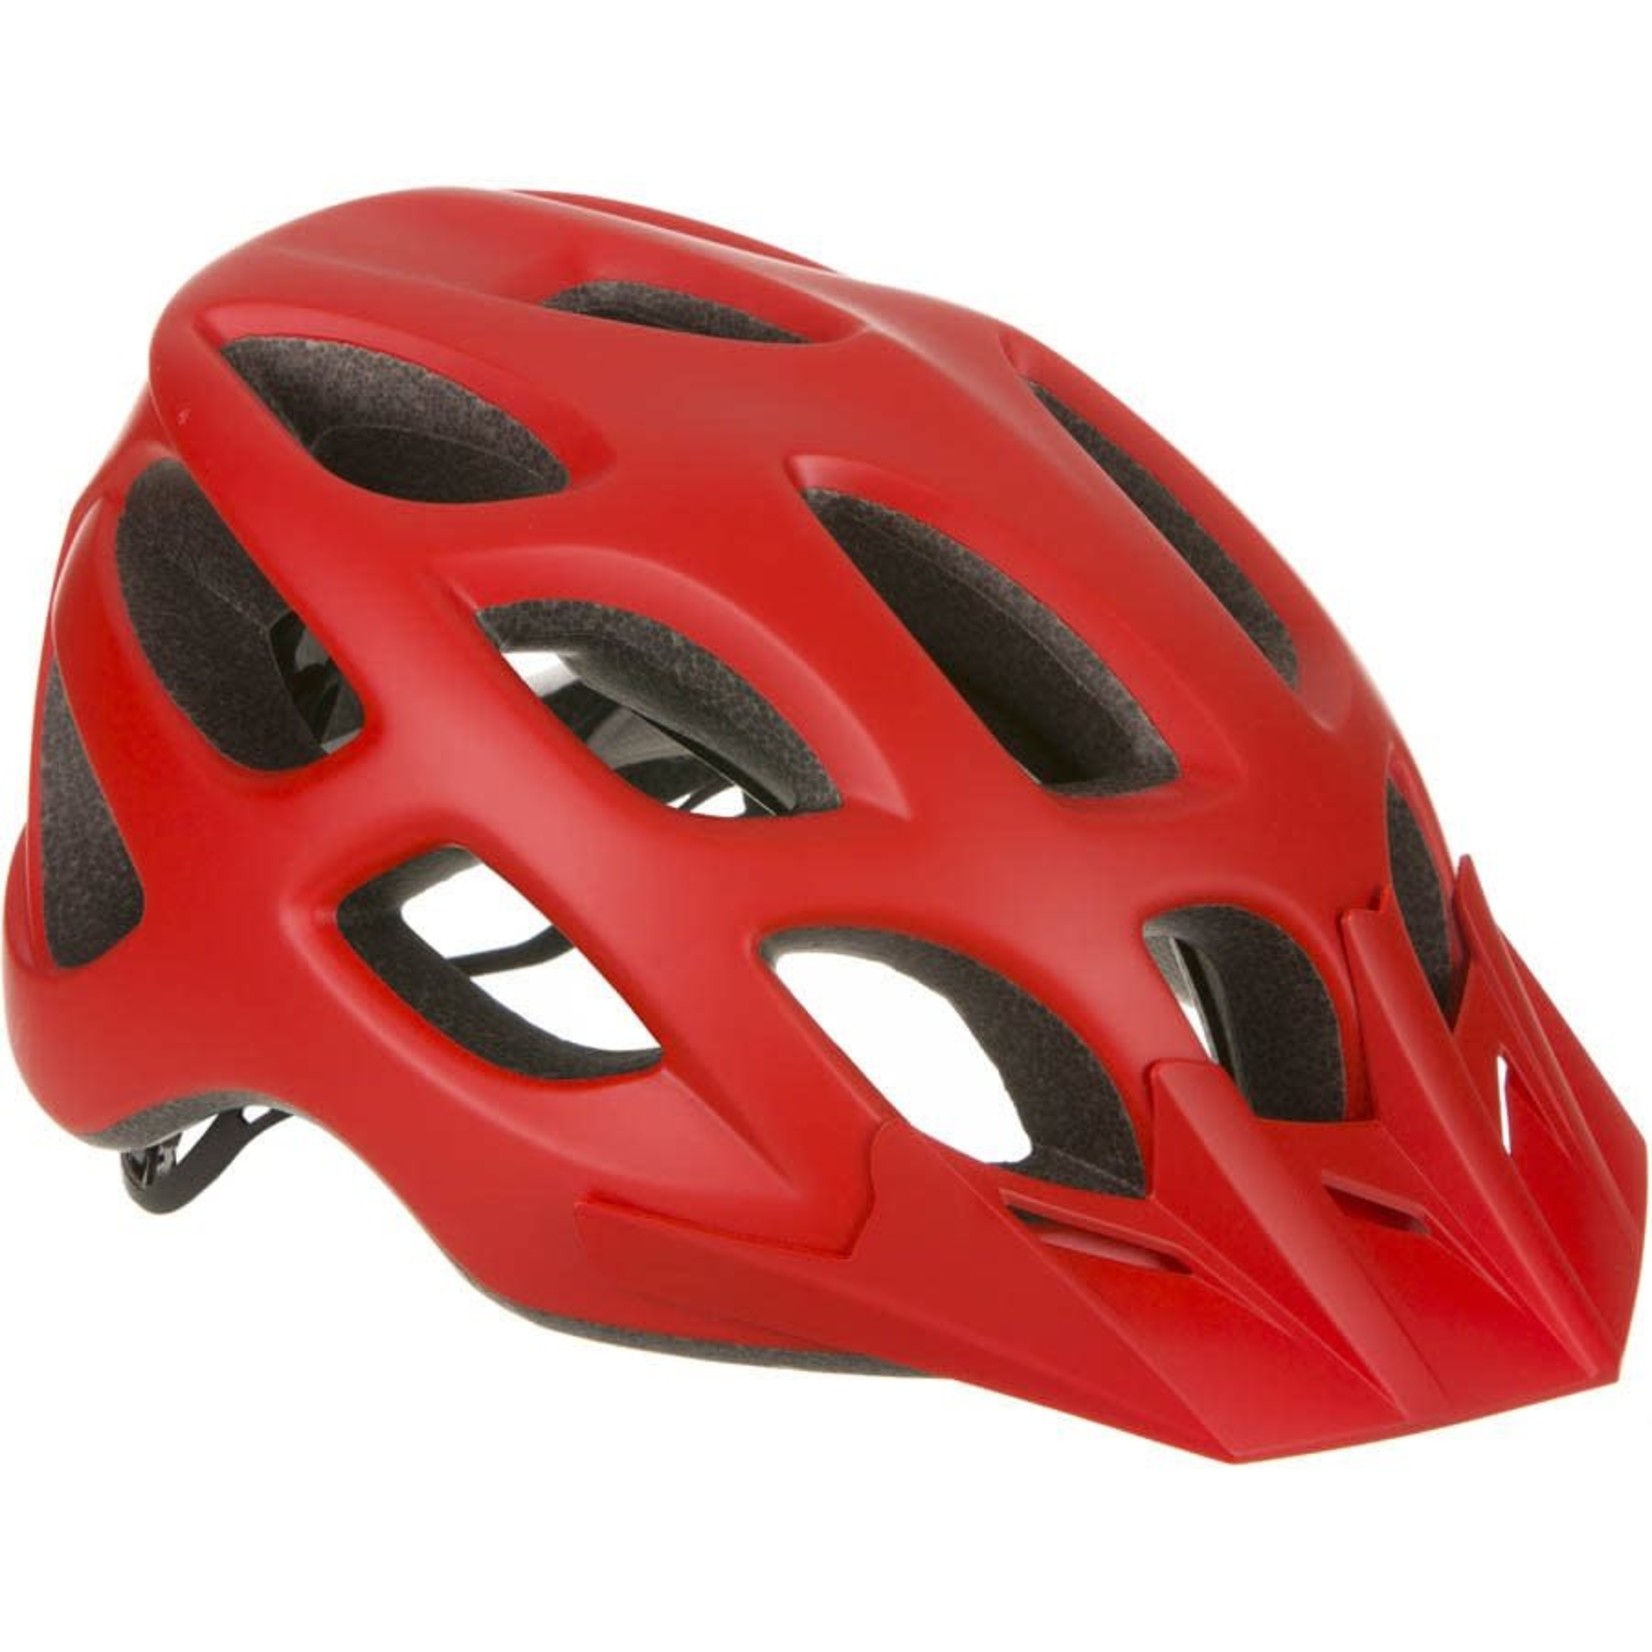 Evo Evo Bike Helmet, Flipshot